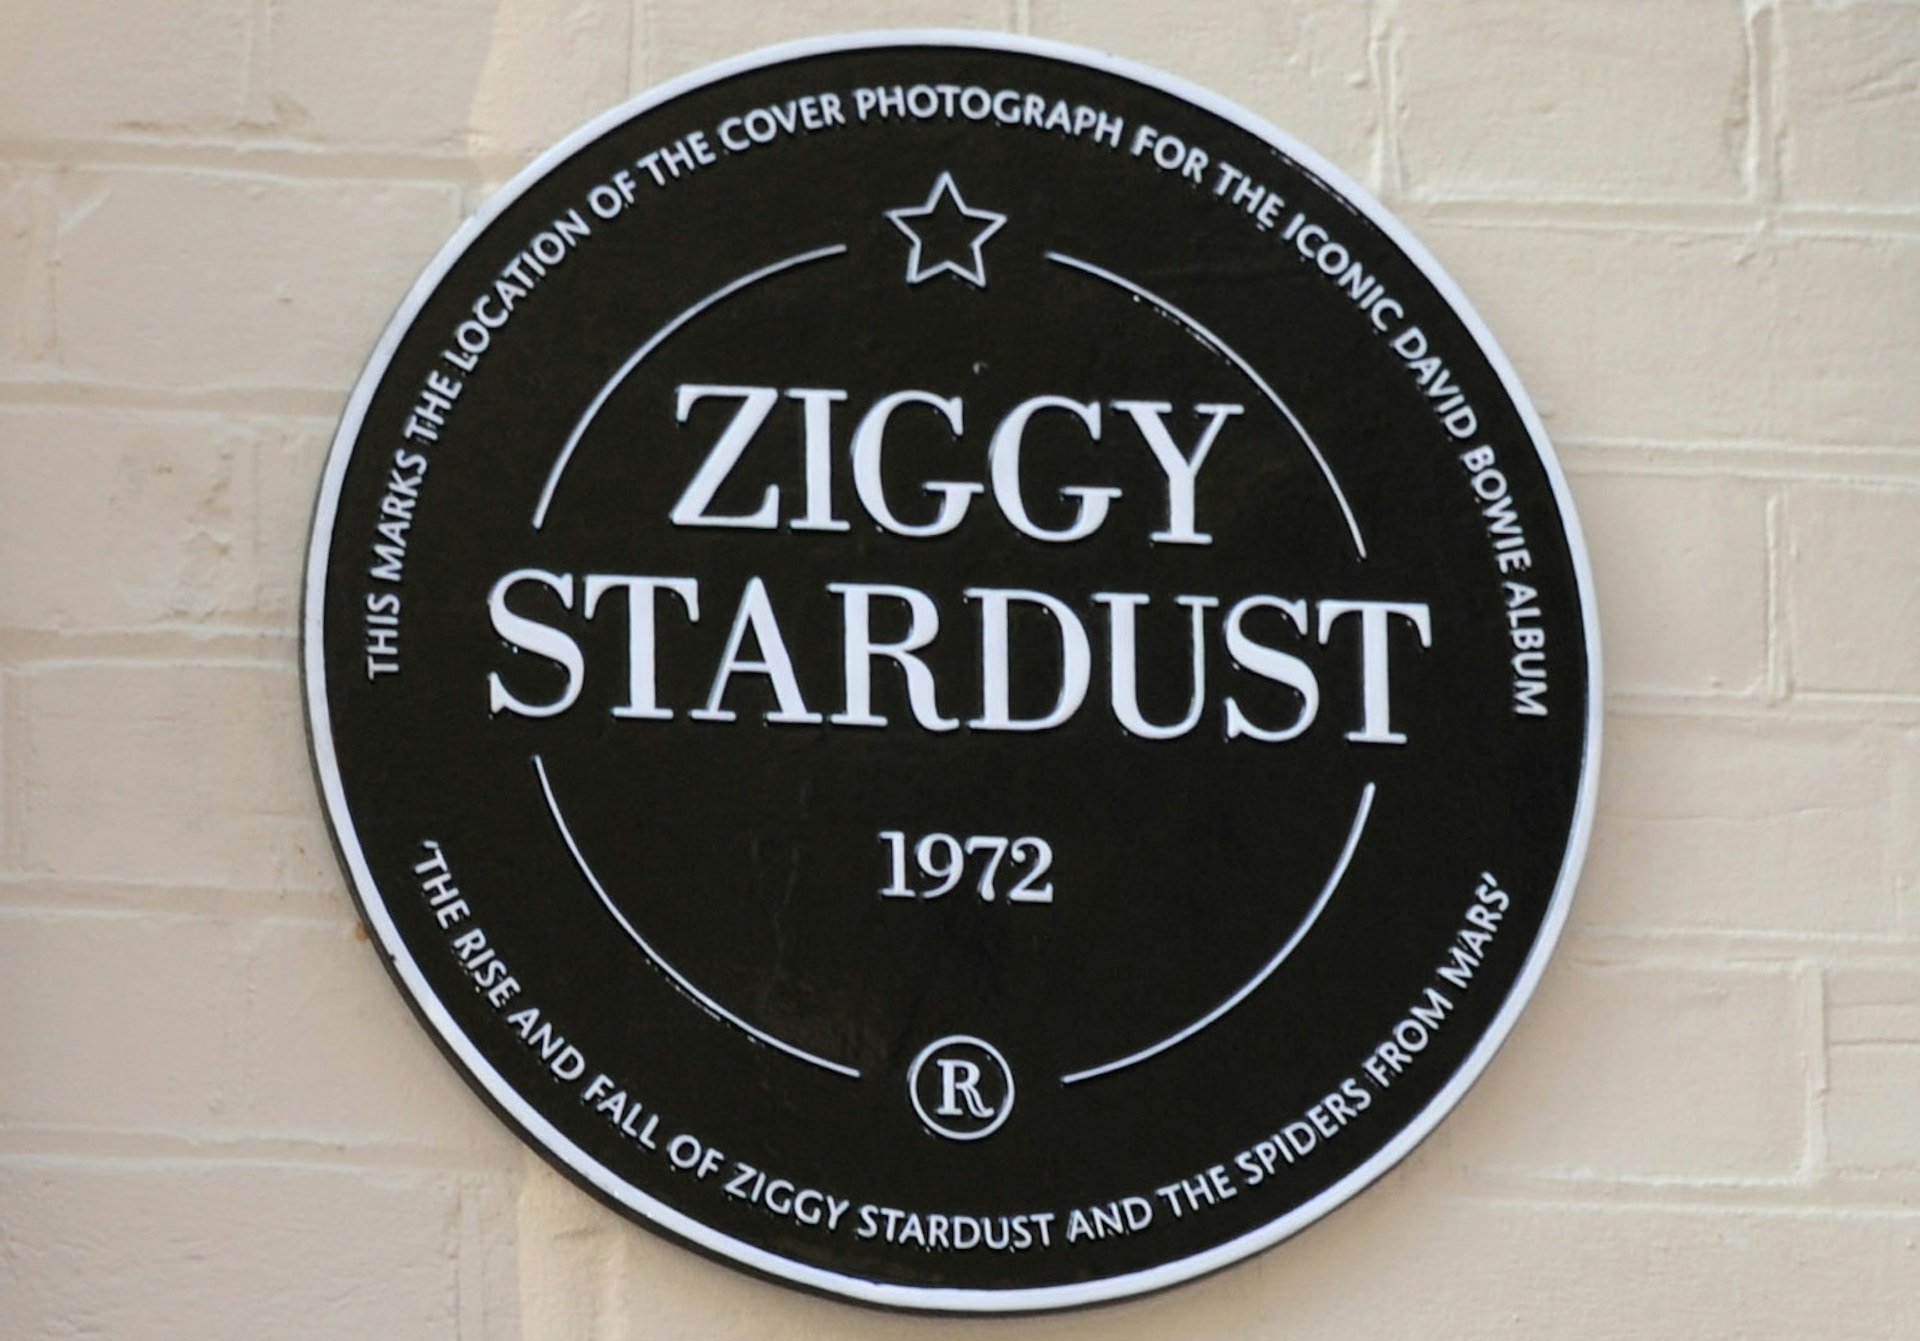 The Ziggy Stardust plaque in London